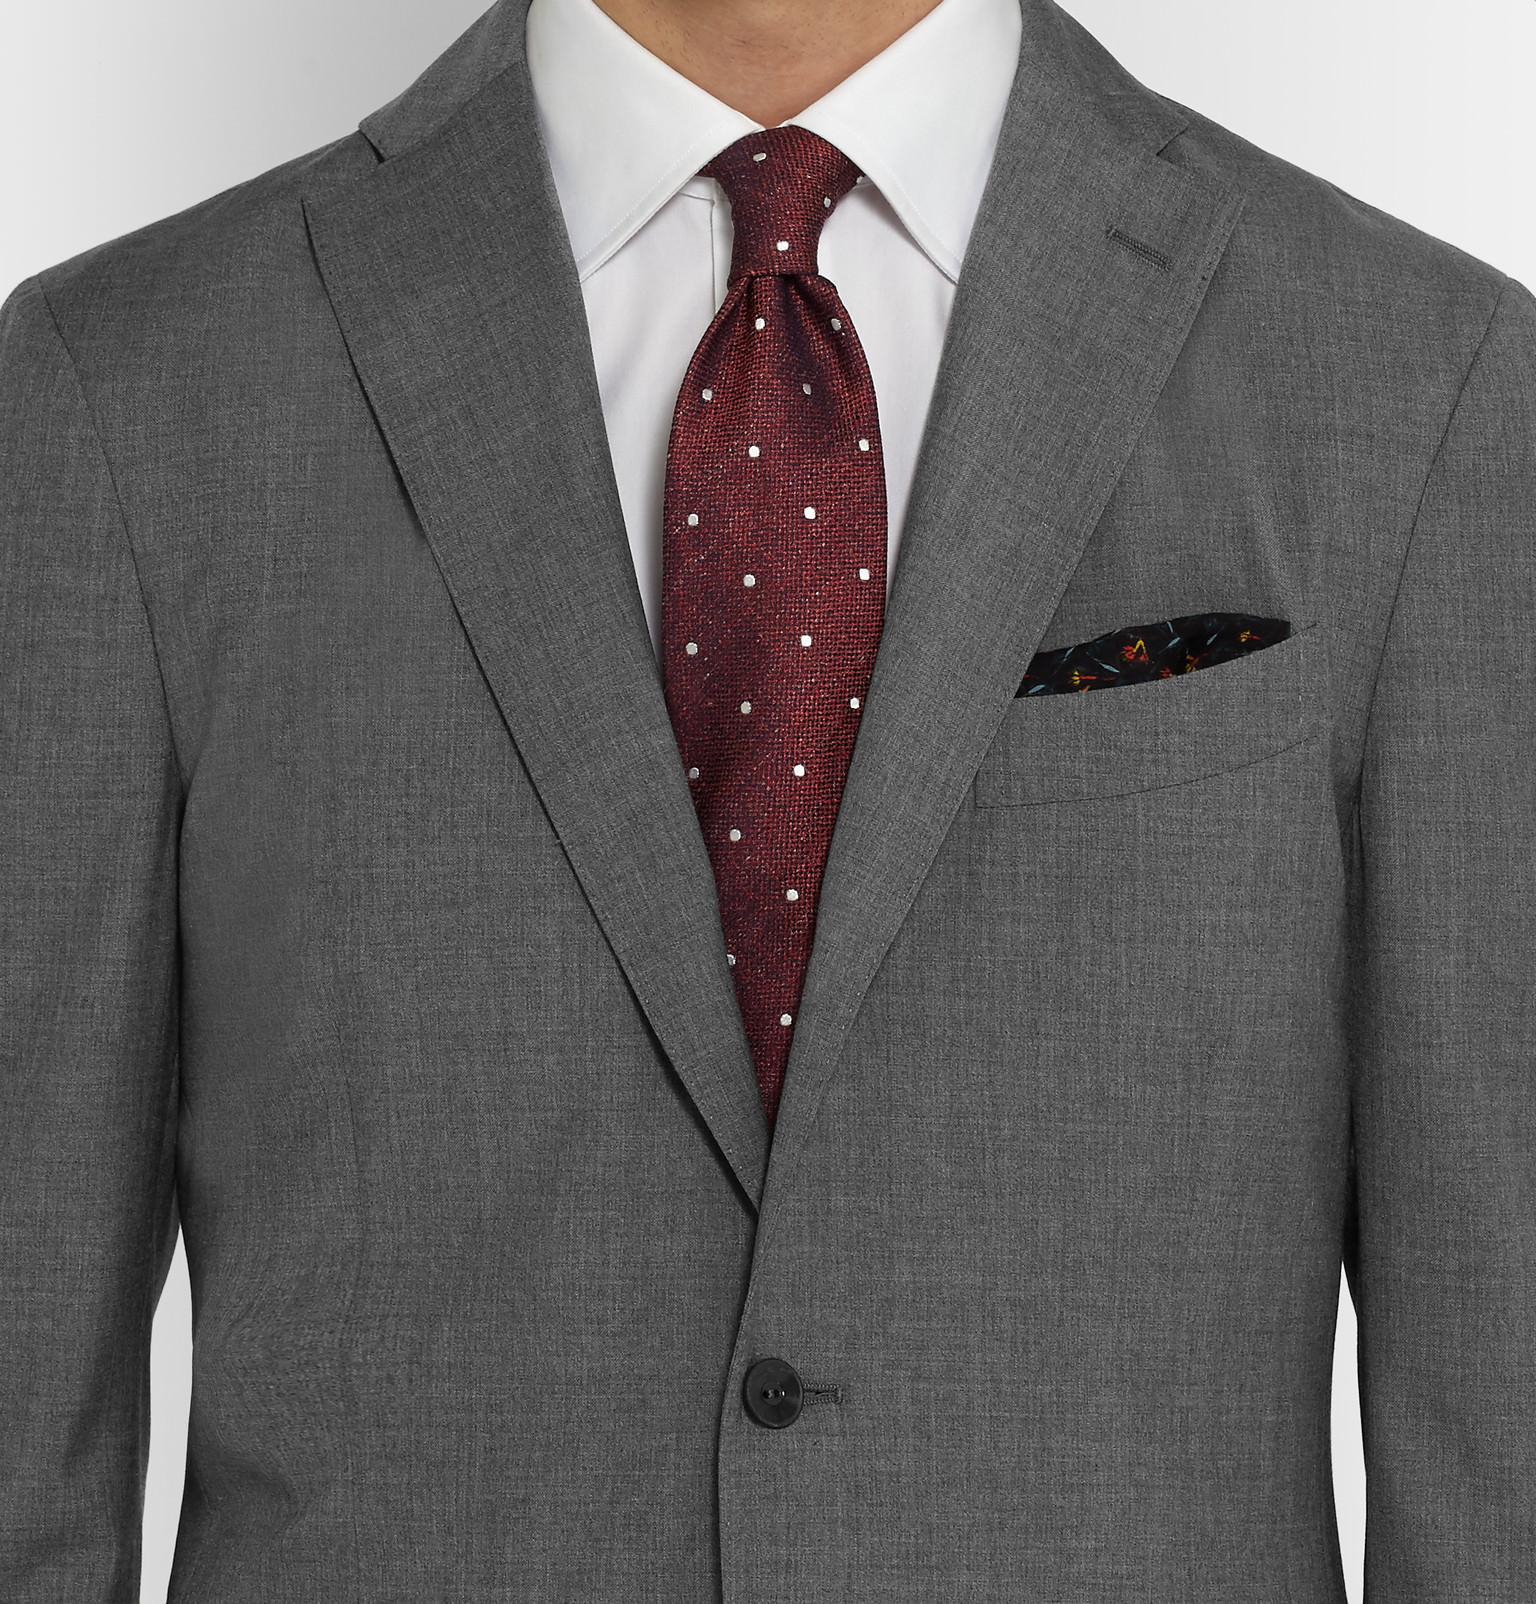 assortir cravate chemise couleur costume gris